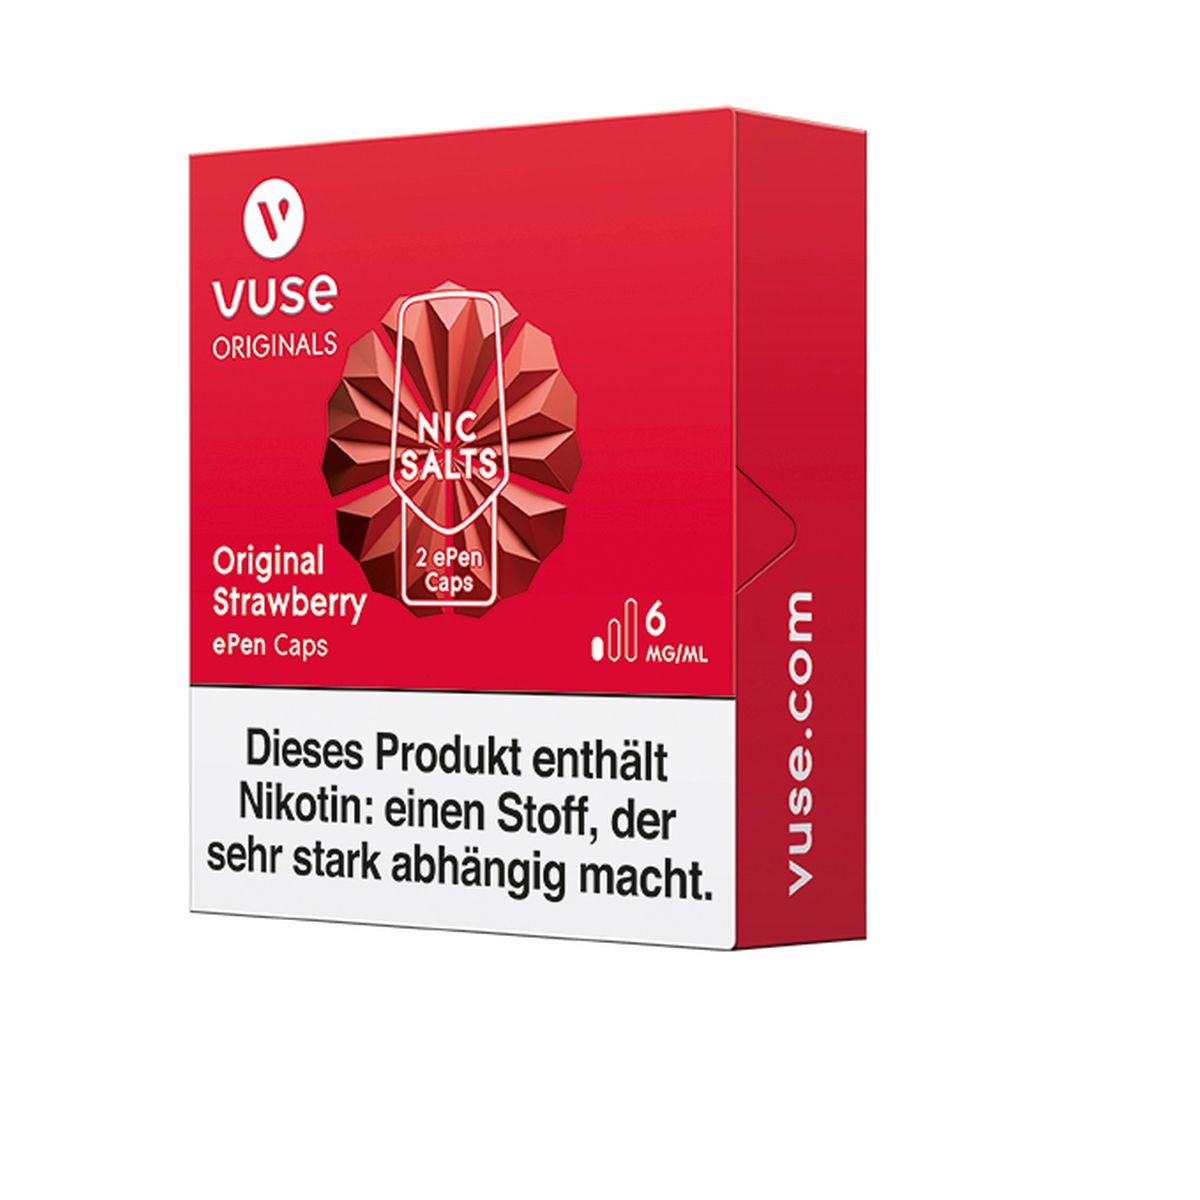 Vuse Vuse ePen Caps Original Strawberry Nic Salts 6mg Nikotin 2ml bei www.Tabakring.de kaufen